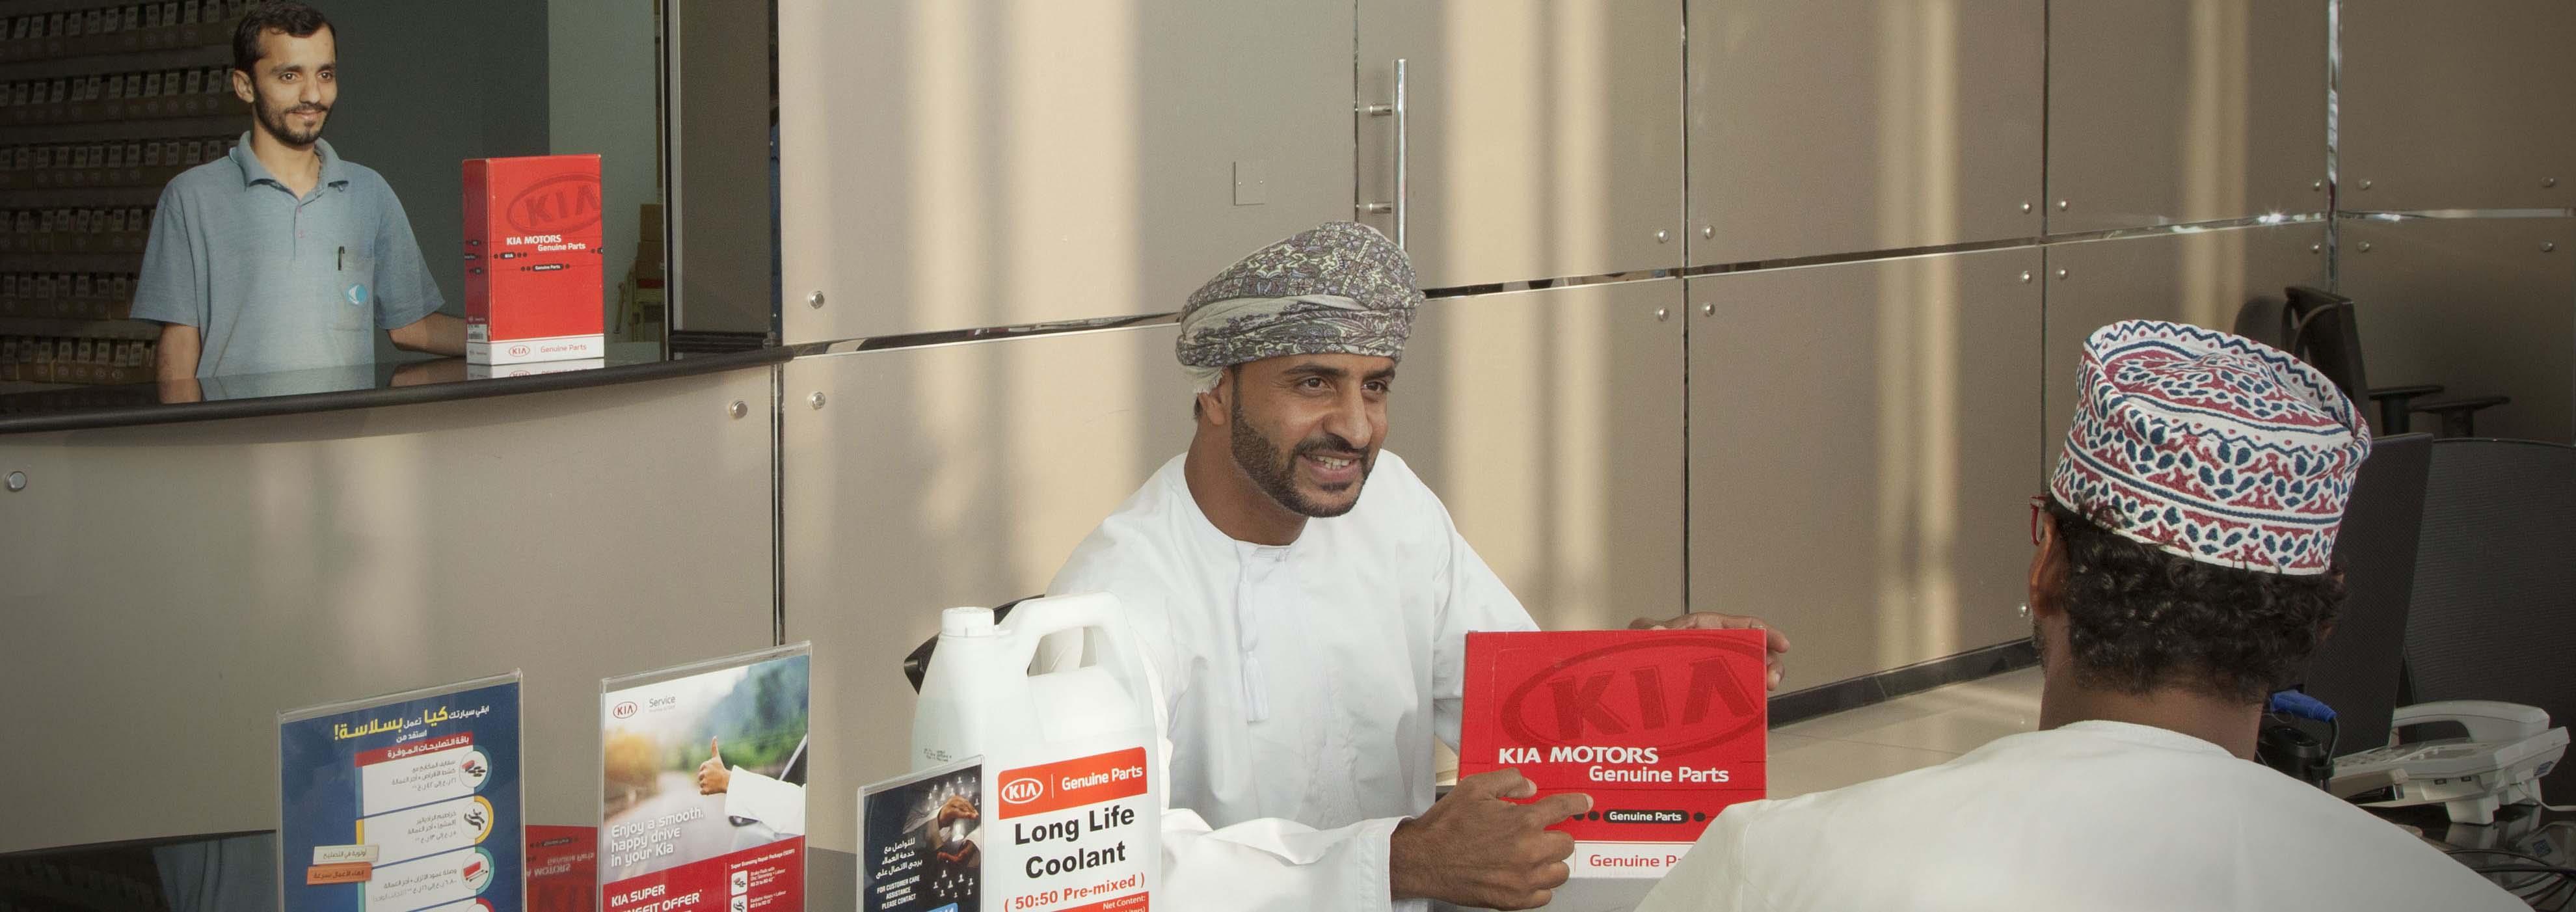 Saud Bahwan's Kia dealership employee explaining about genuine kia parts to a customer